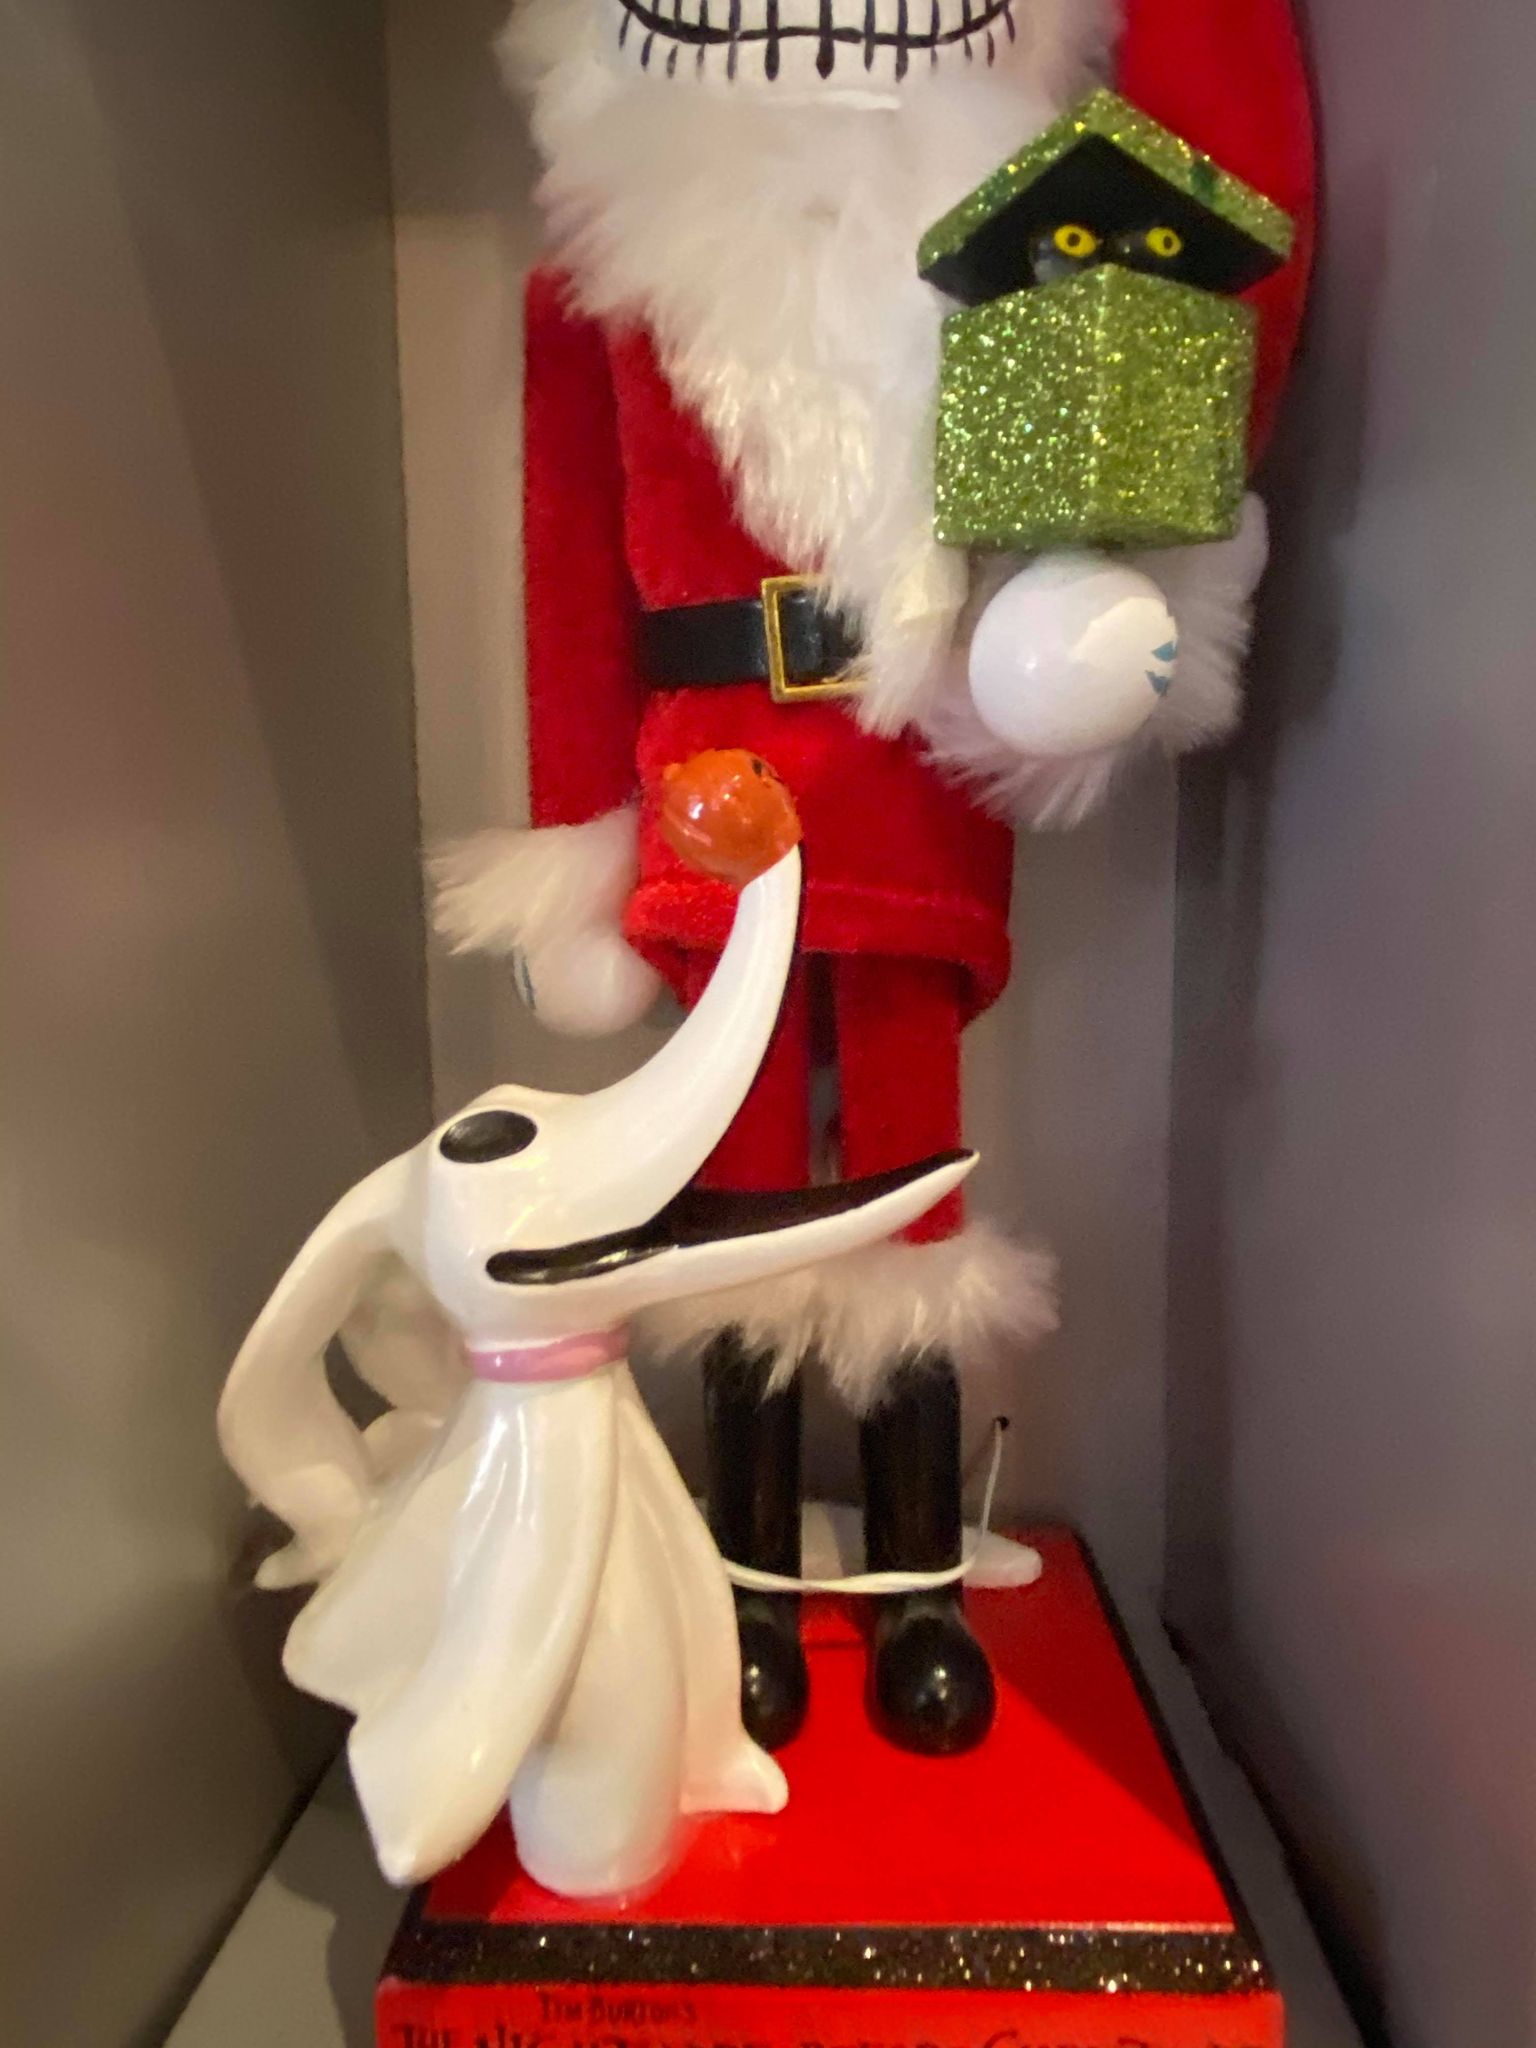 The Nightmare Before Christmas 14" Santa Outfit Suit Jack Skellington Nutcracker